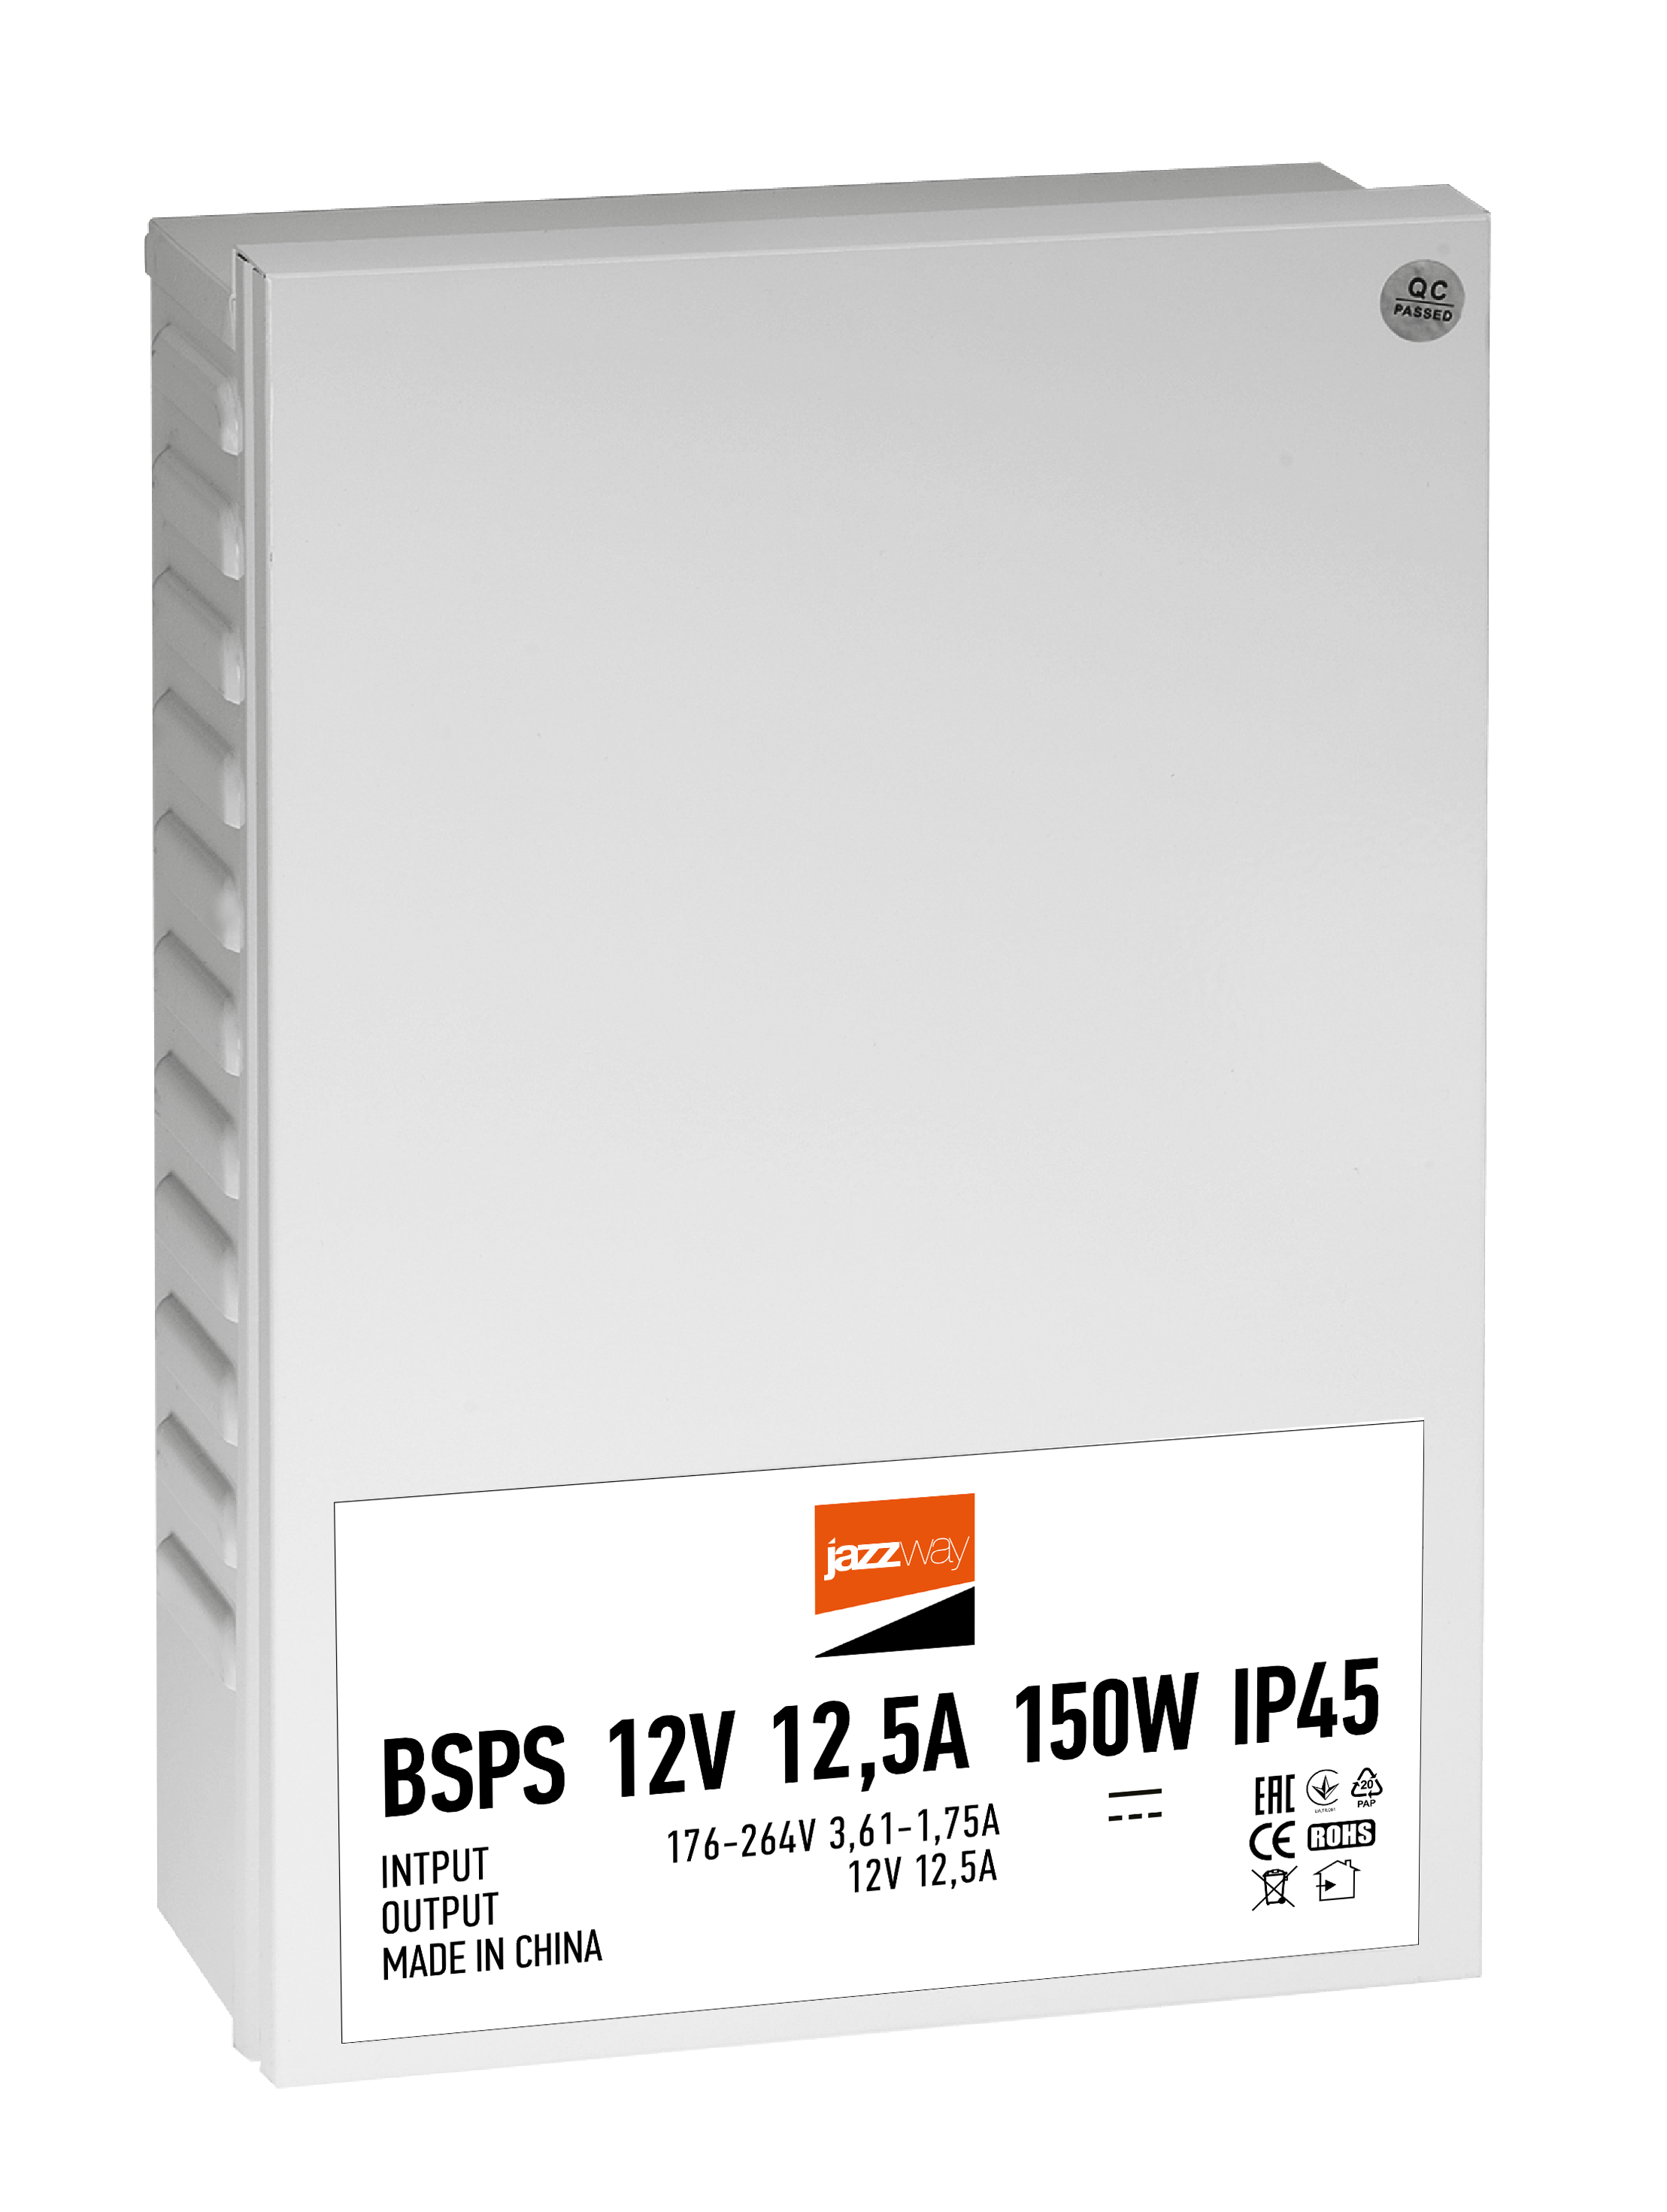 Блок питания BSPS 12V 12,50A=150W IP45 3 г. гар. .1001221 JazzWay